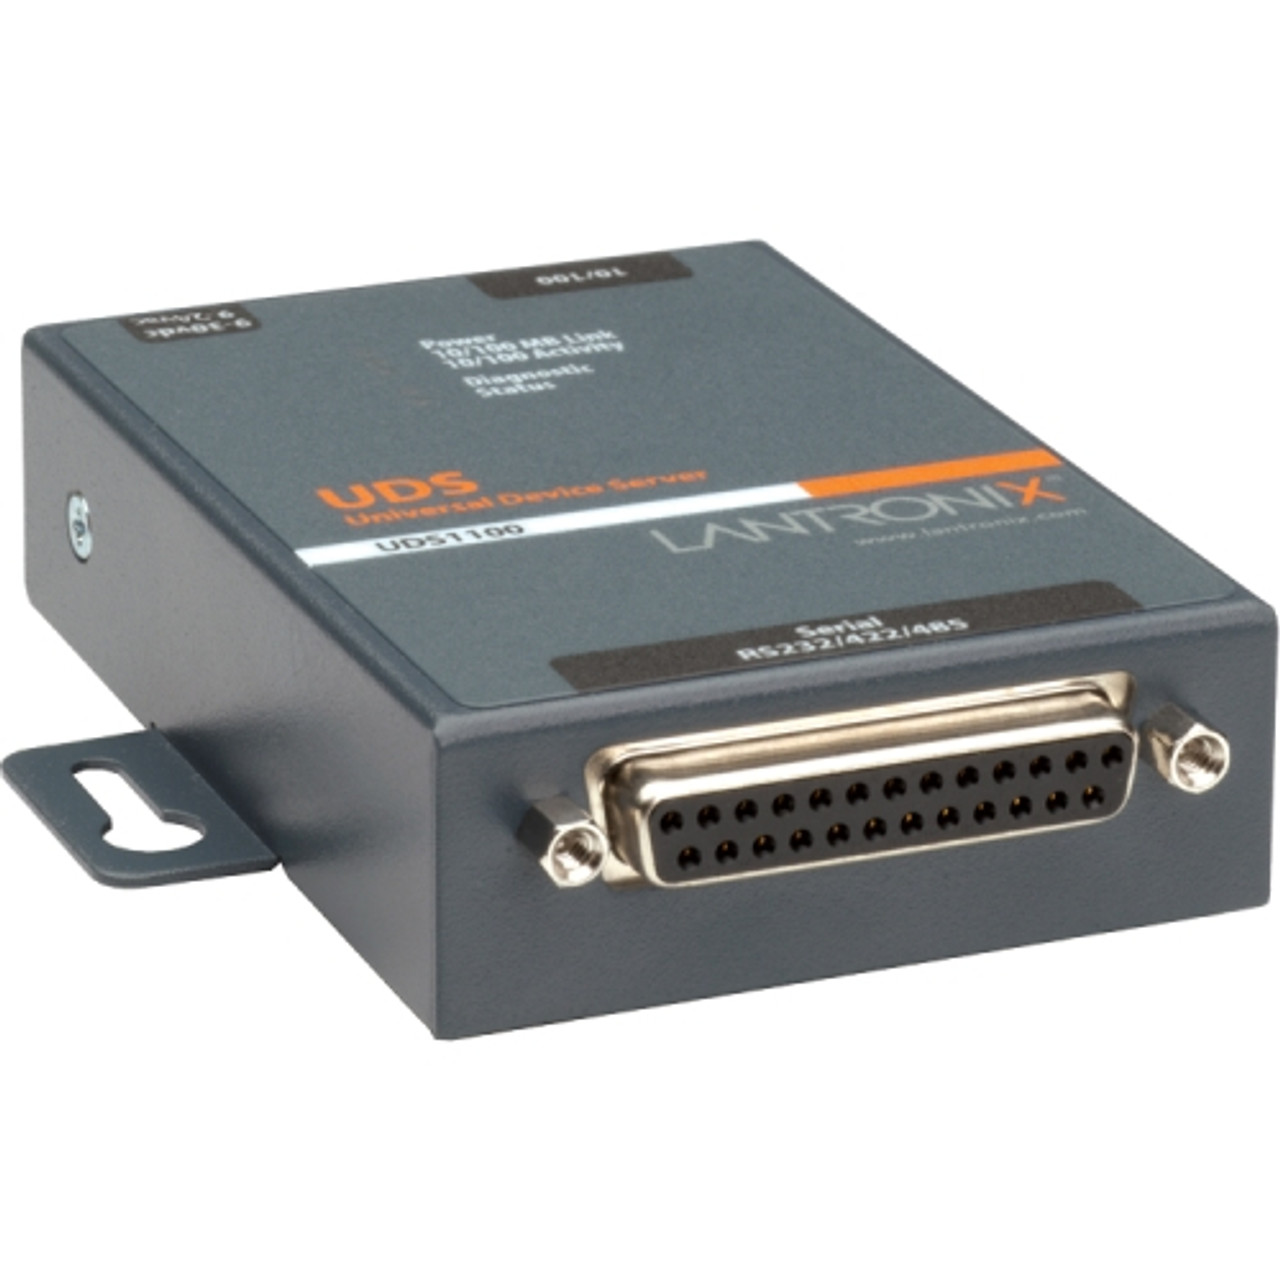 UD1100NL2-01 Lantronix UDS1100 Device Server 1 x RJ-45 10/100Base-TX Network